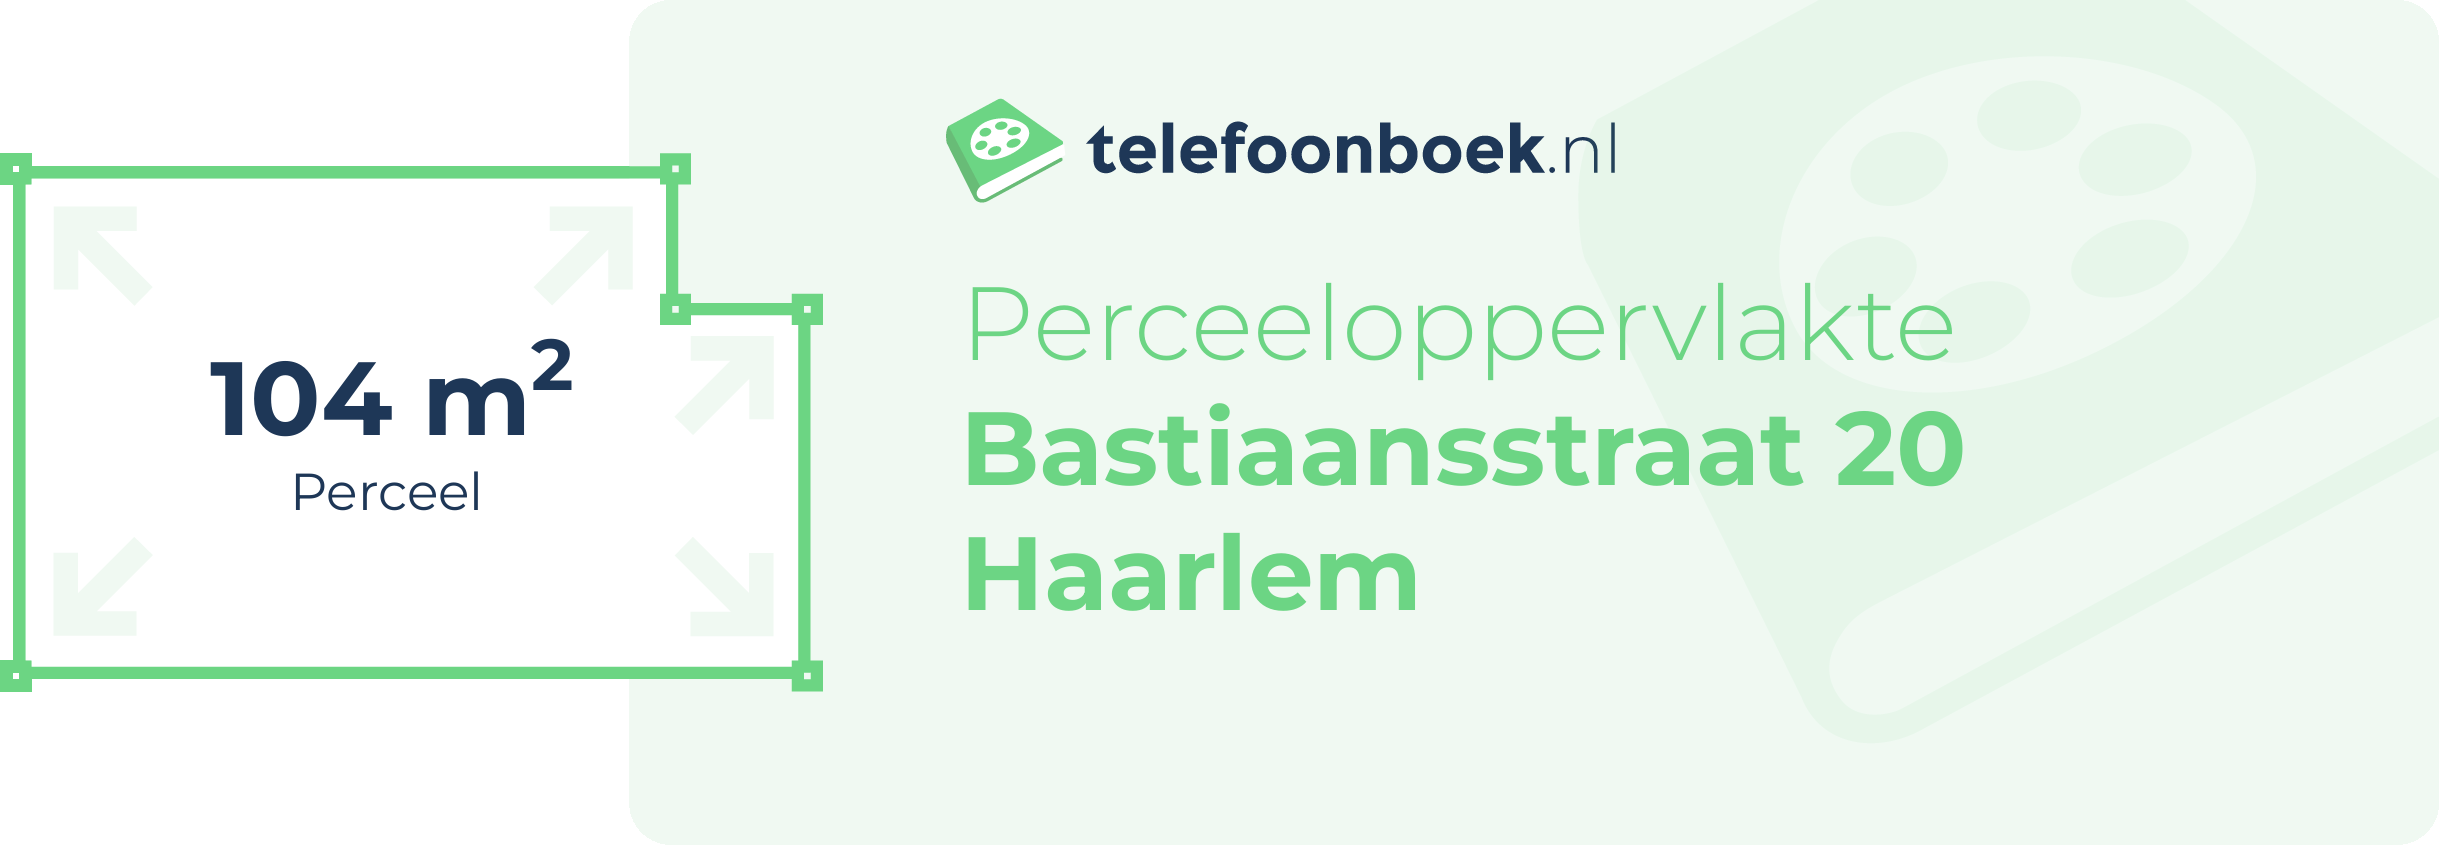 Perceeloppervlakte Bastiaansstraat 20 Haarlem